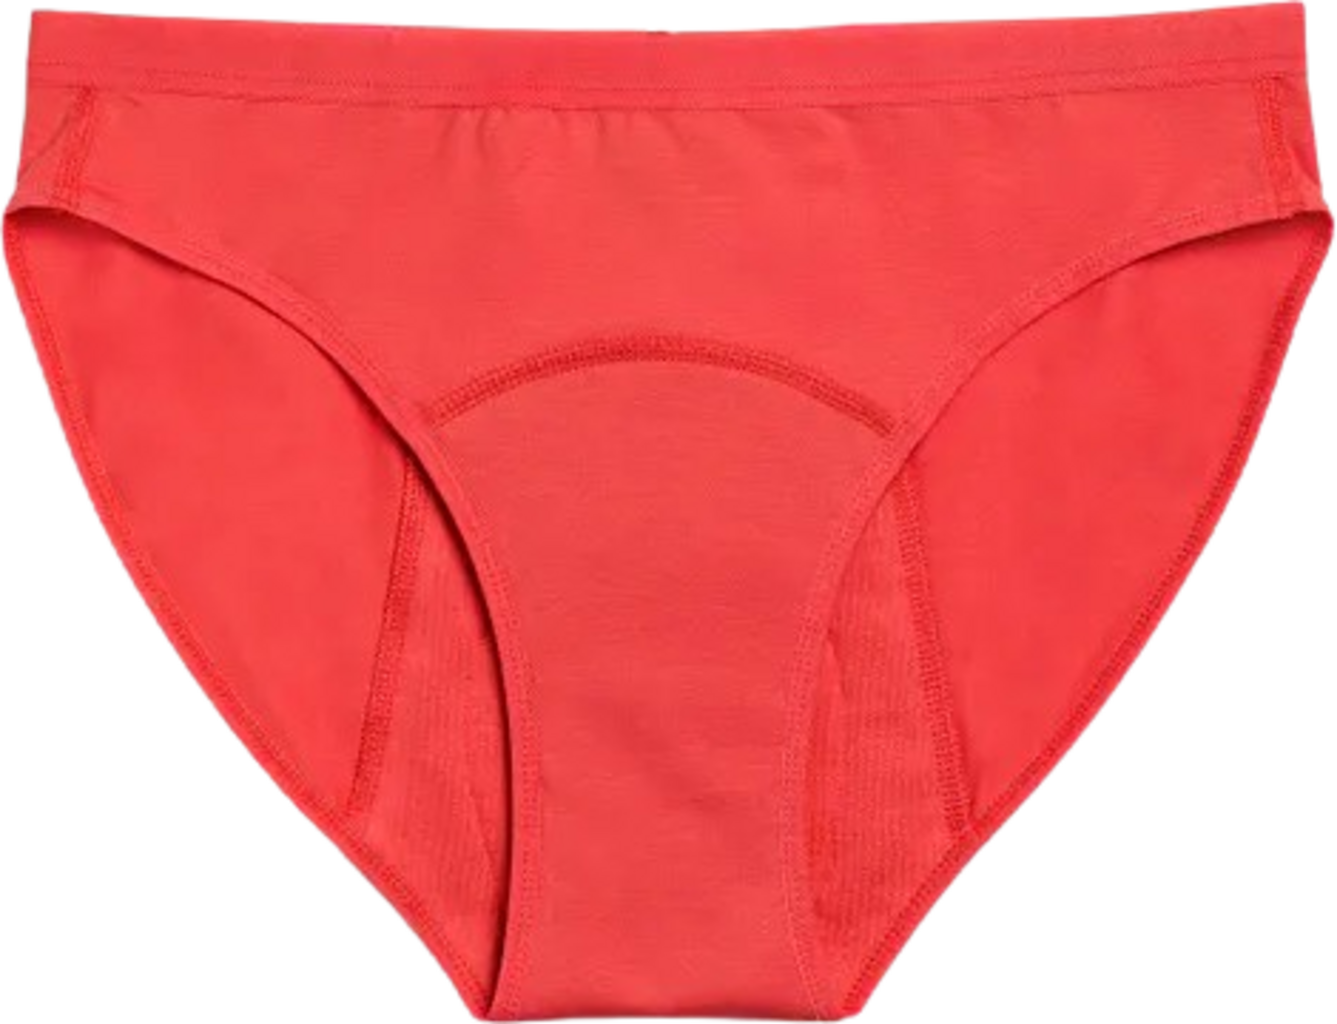 Bright Red Teen Bikini Period Underwear - Heavy Flow, XS